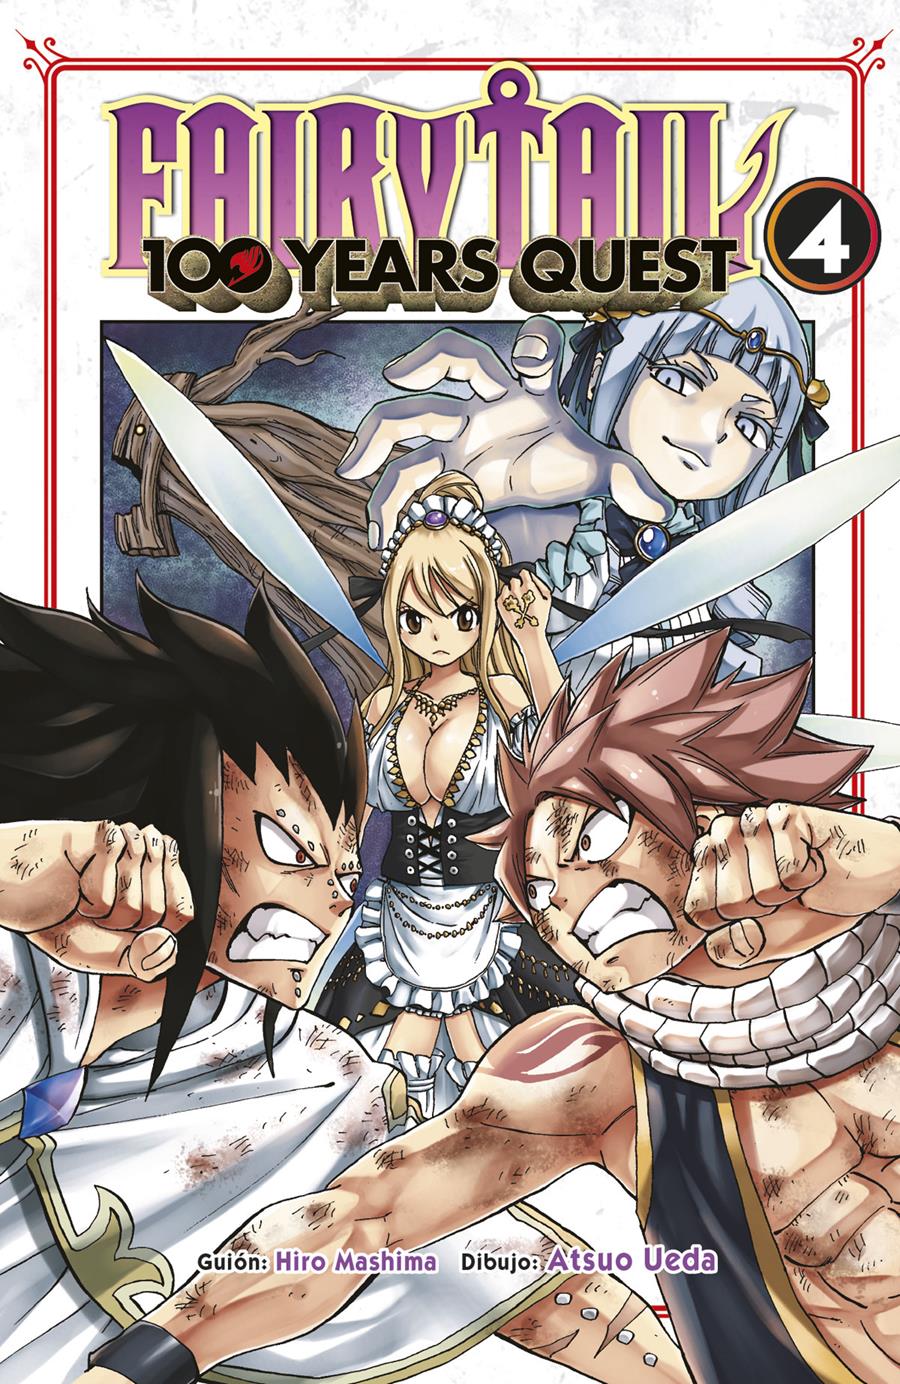 Fairy Tail 100 years quest 04 | N0121-NOR18 | Hiro Mashima, Atsuo Ueda | Terra de Còmic - Tu tienda de cómics online especializada en cómics, manga y merchandising